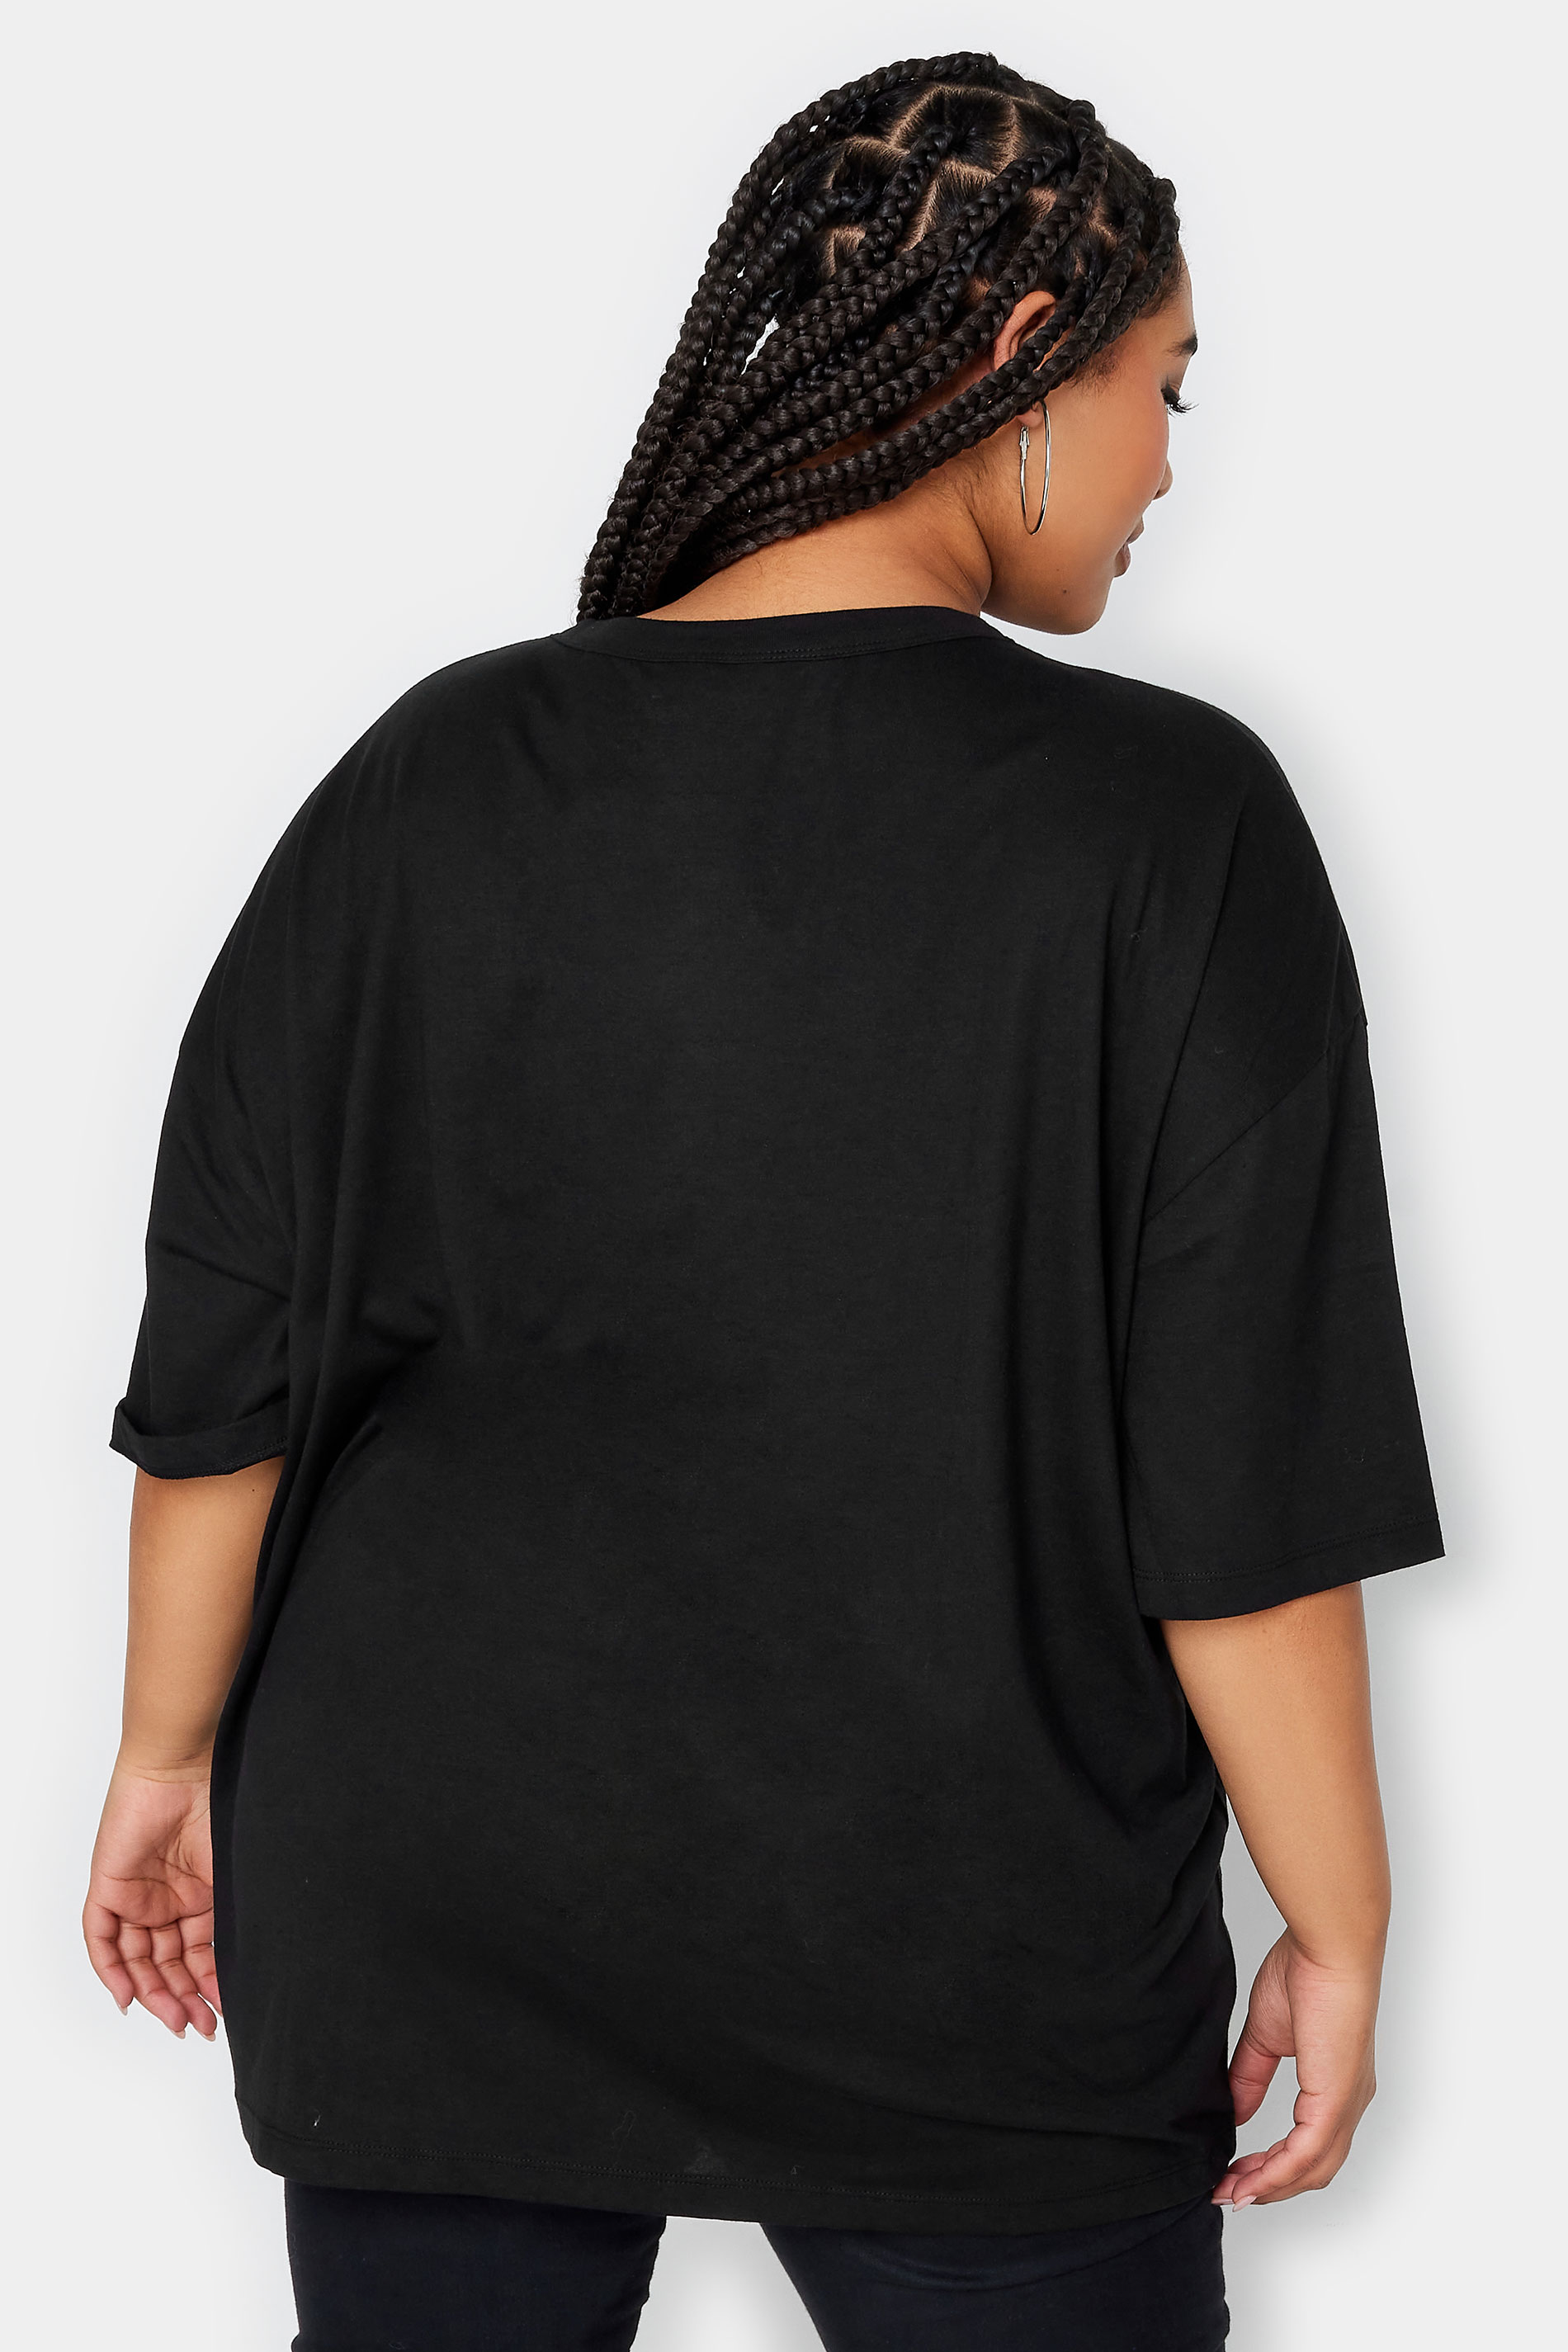 YOURS Plus Size Black 'Arizona' Print Ring Detail T-Shirt | Yours Clothing  3